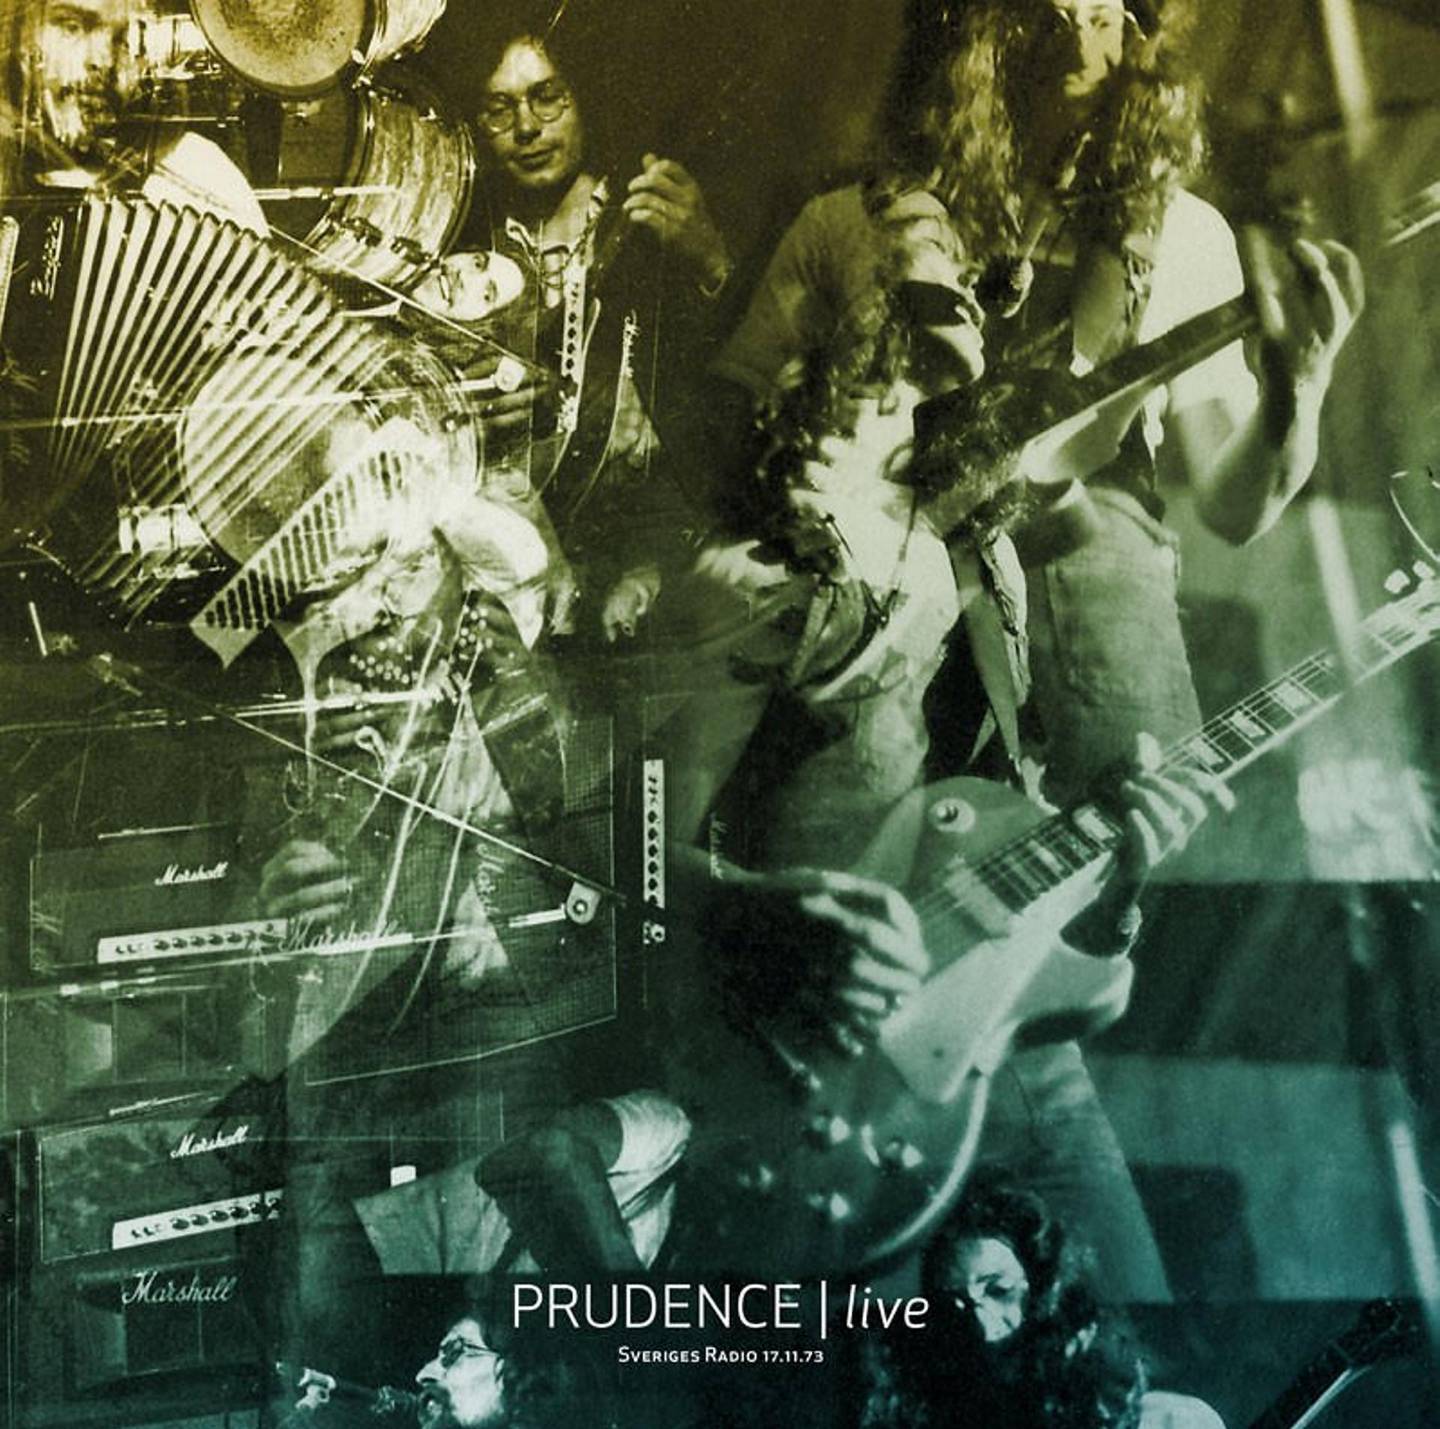 Prudence
«Live – Sveriges Radio 17.11.73»
Pan Records,KUL Anm Musikk D: